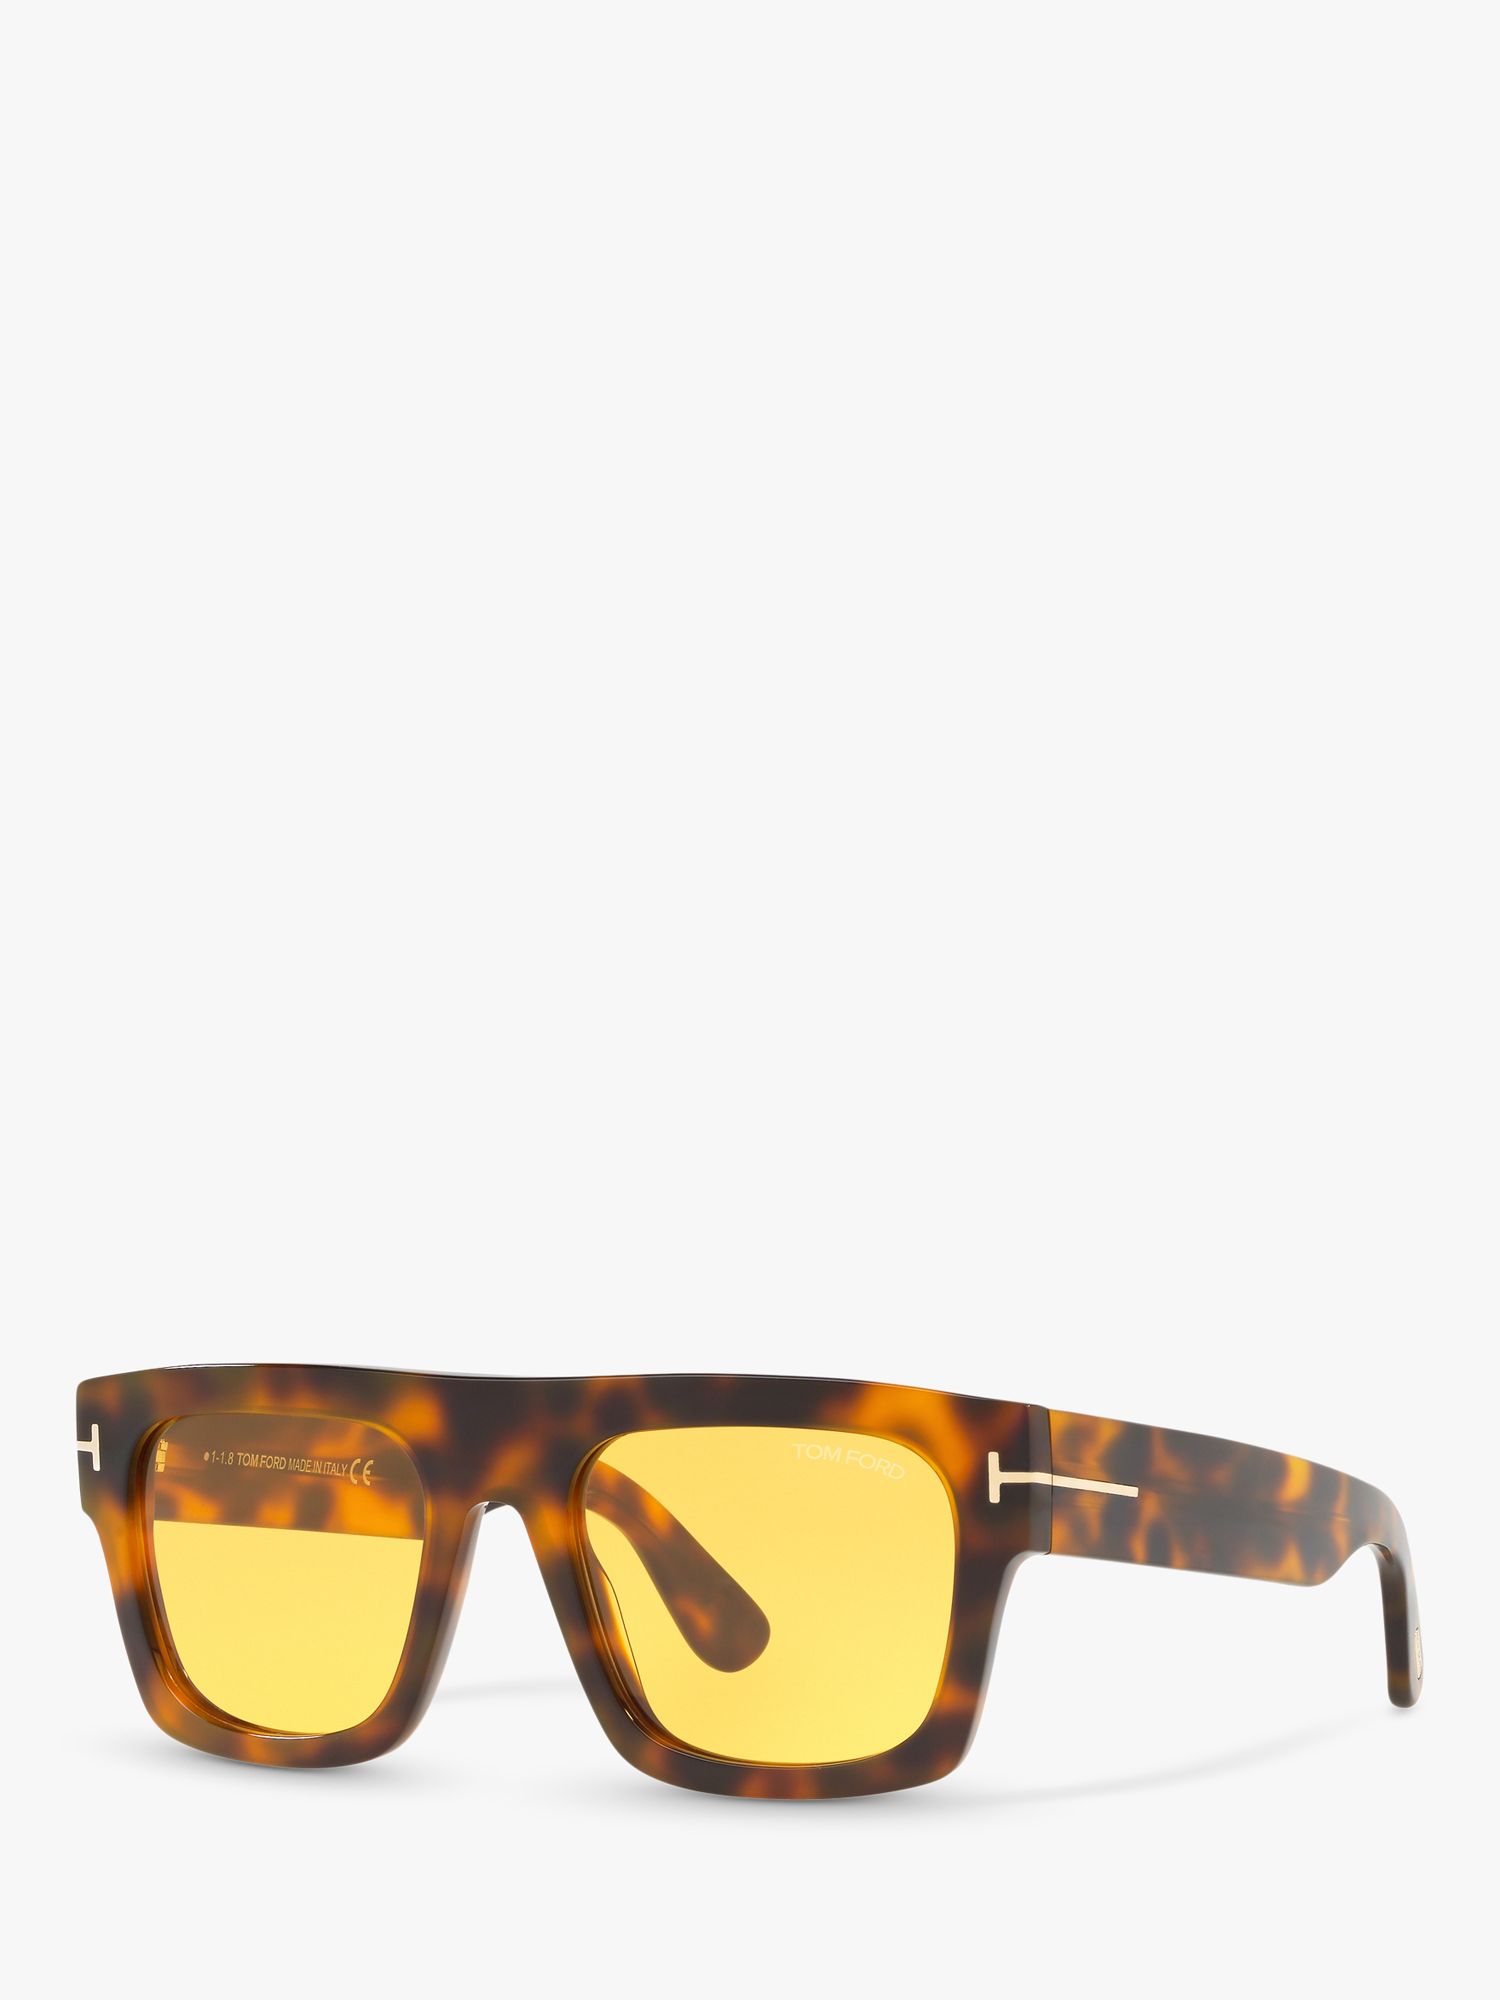 TOM FORD - Sunglasses | John Lewis & Partners